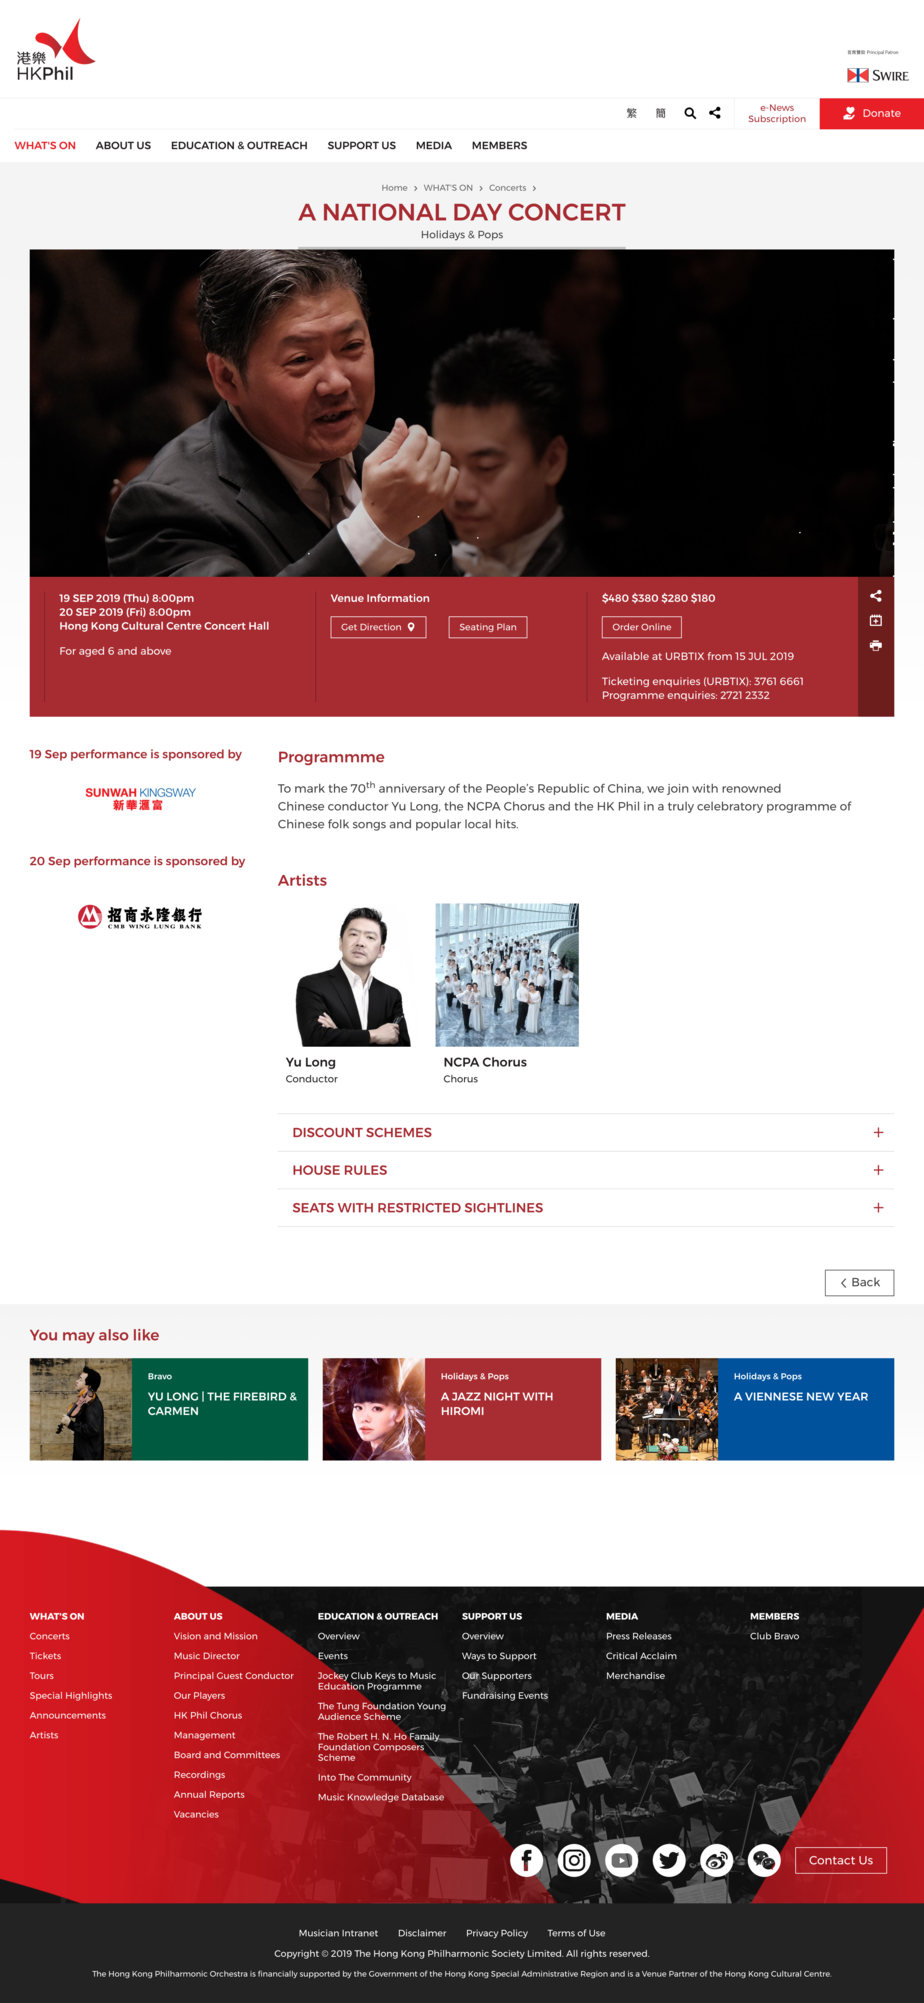 Hong Kong Philharmonic  website screenshot for desktop version 3 of 5